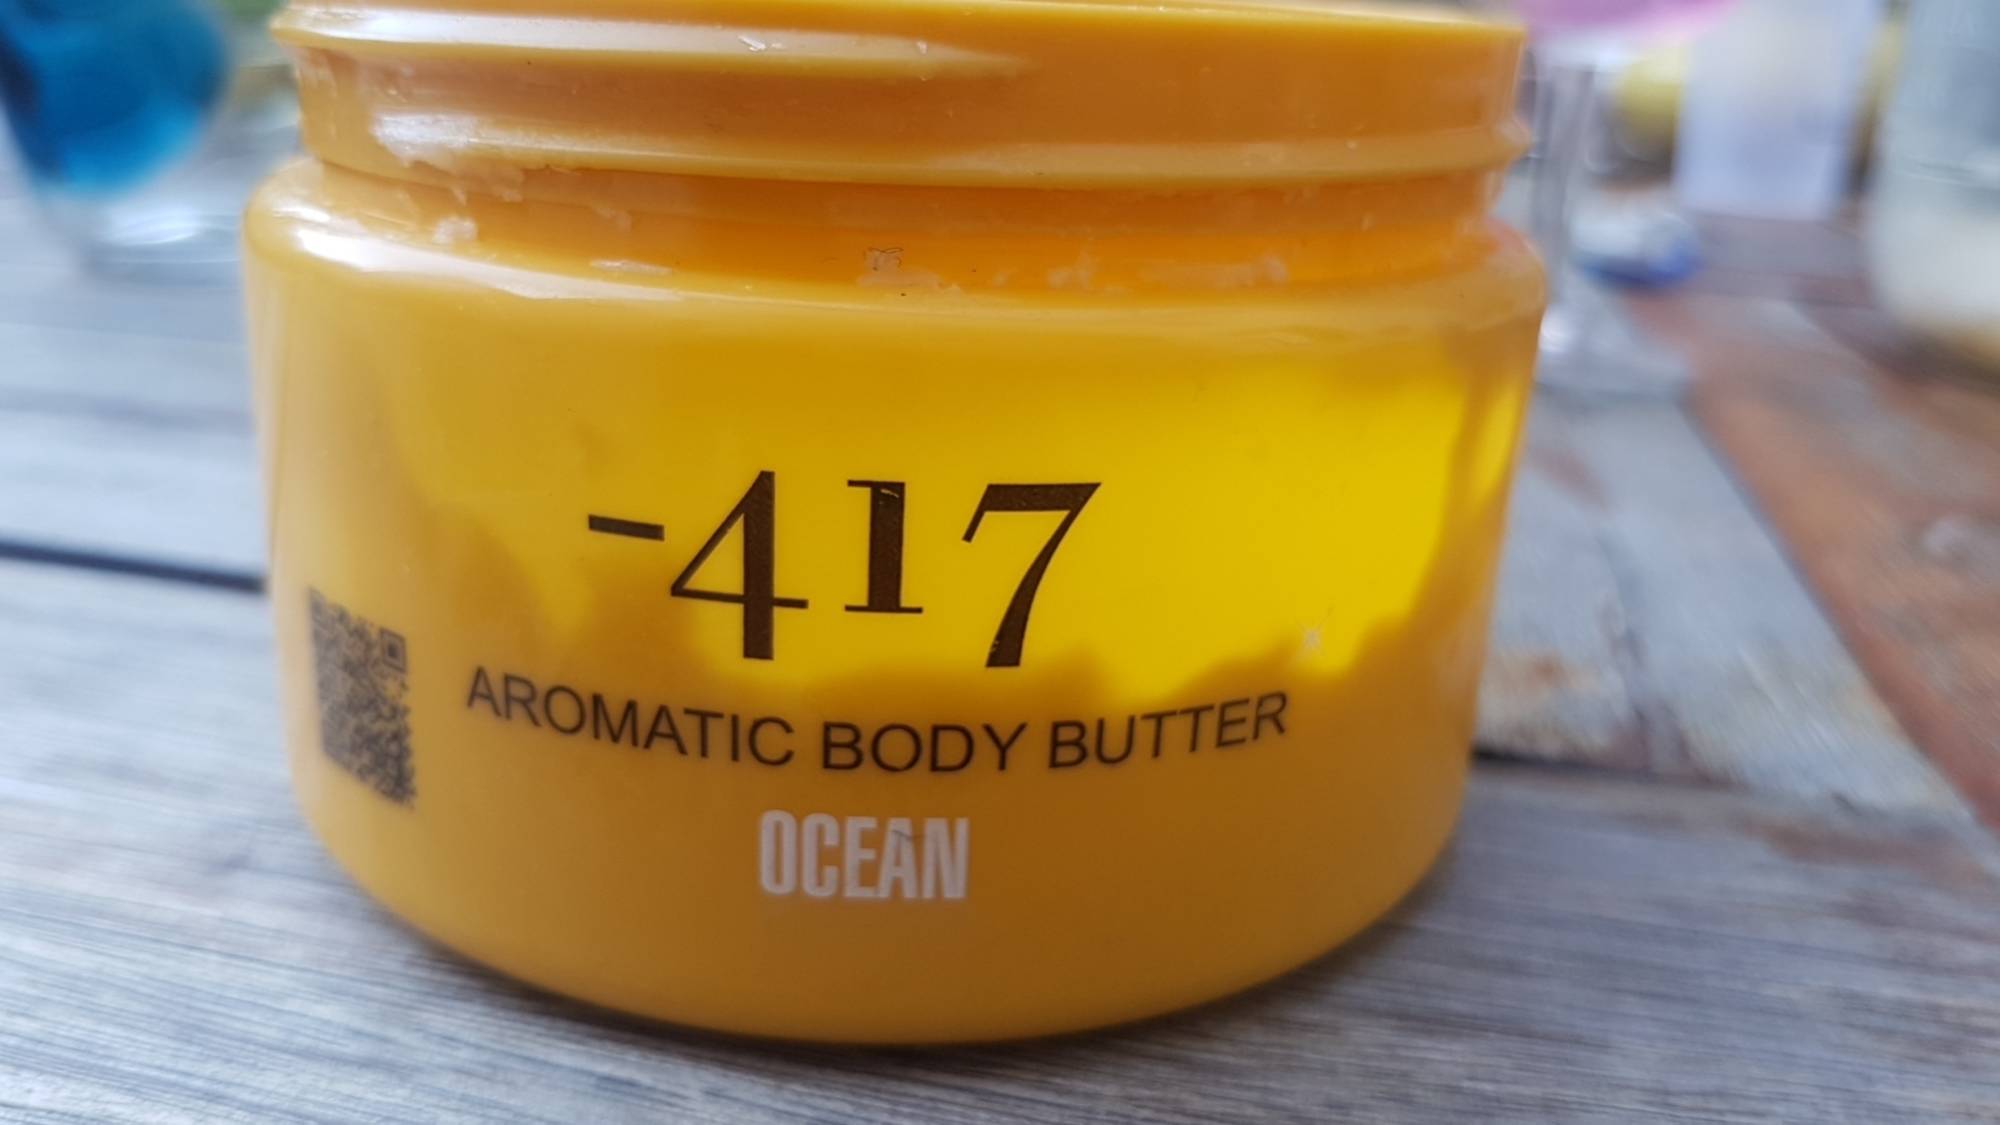 MINUS 417 - Ocean - Aromatic body butter